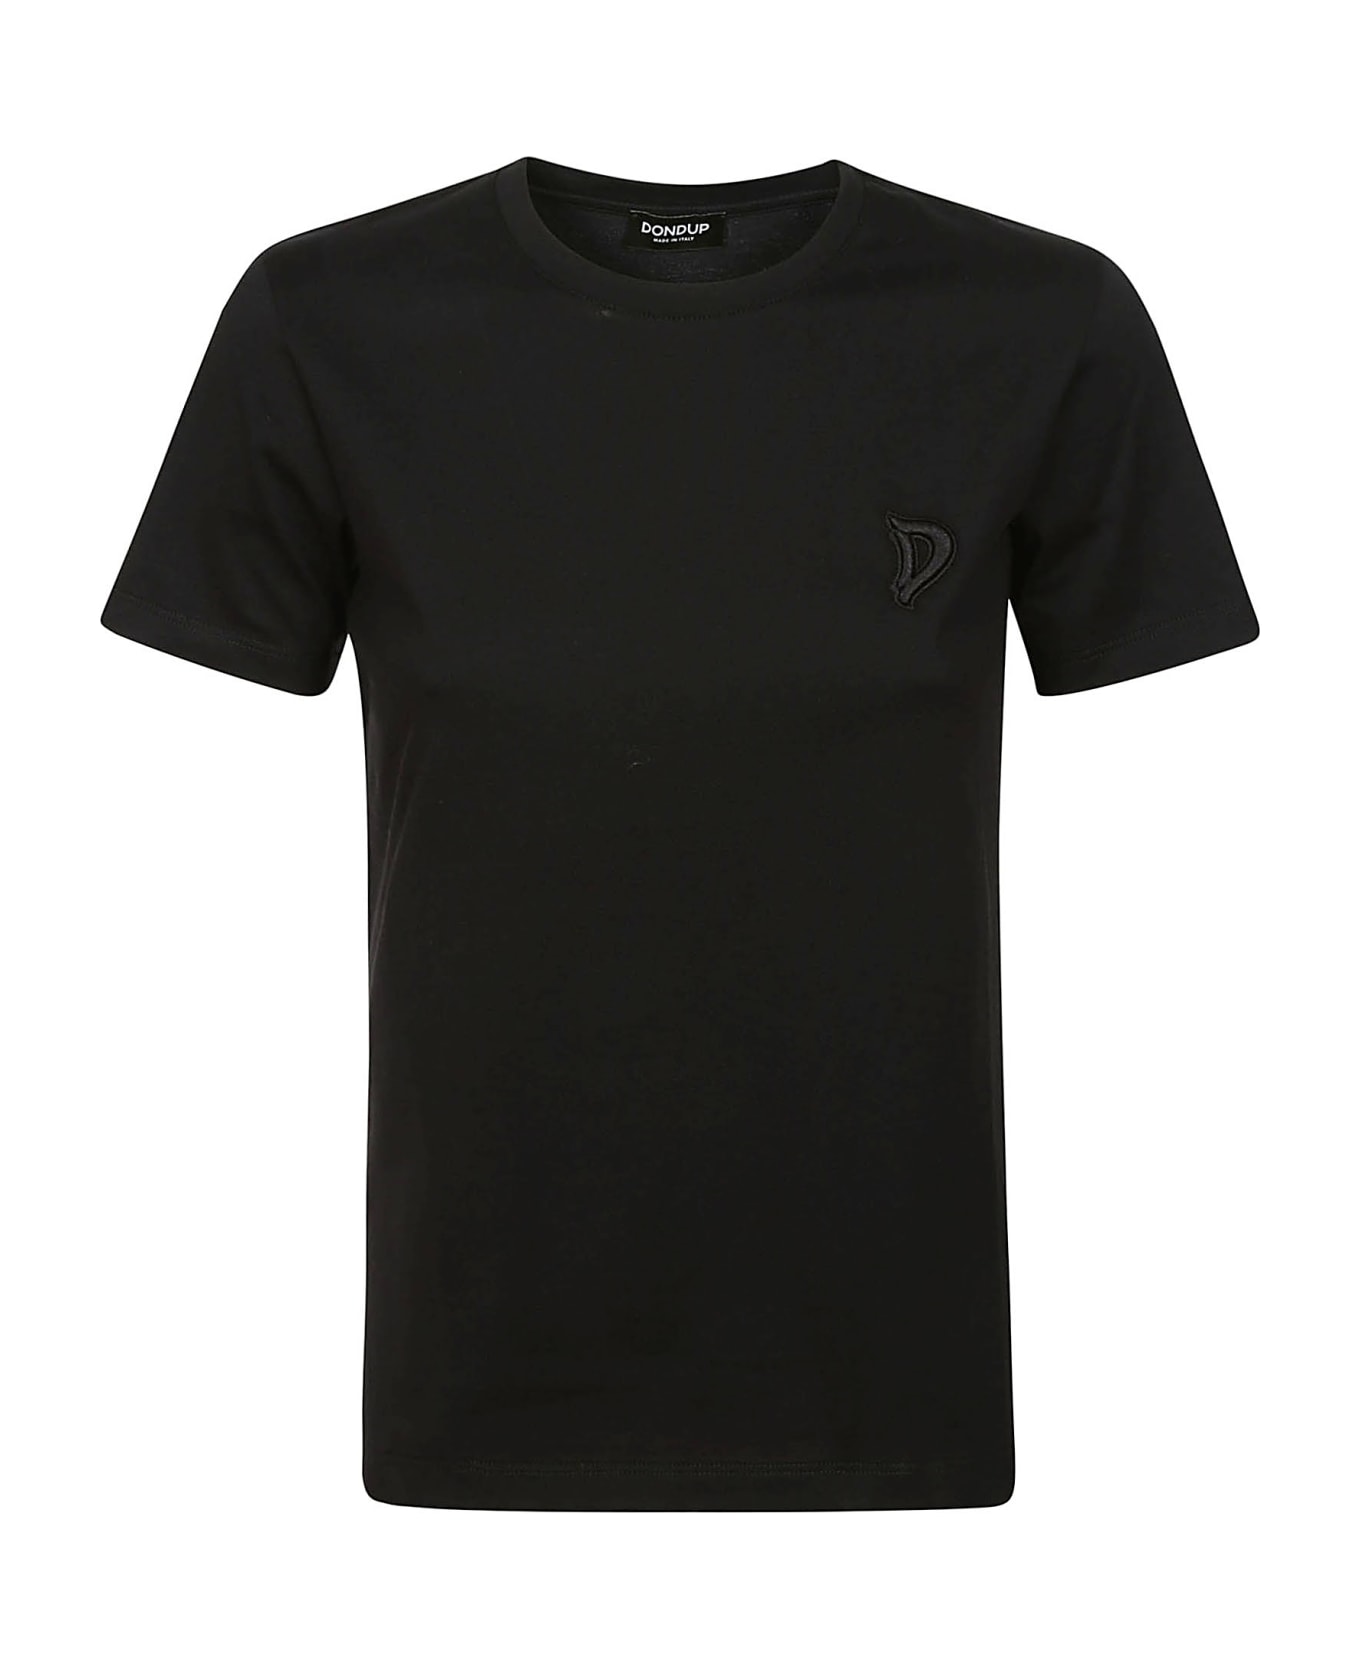 Dondup T-shirt - Black Tシャツ